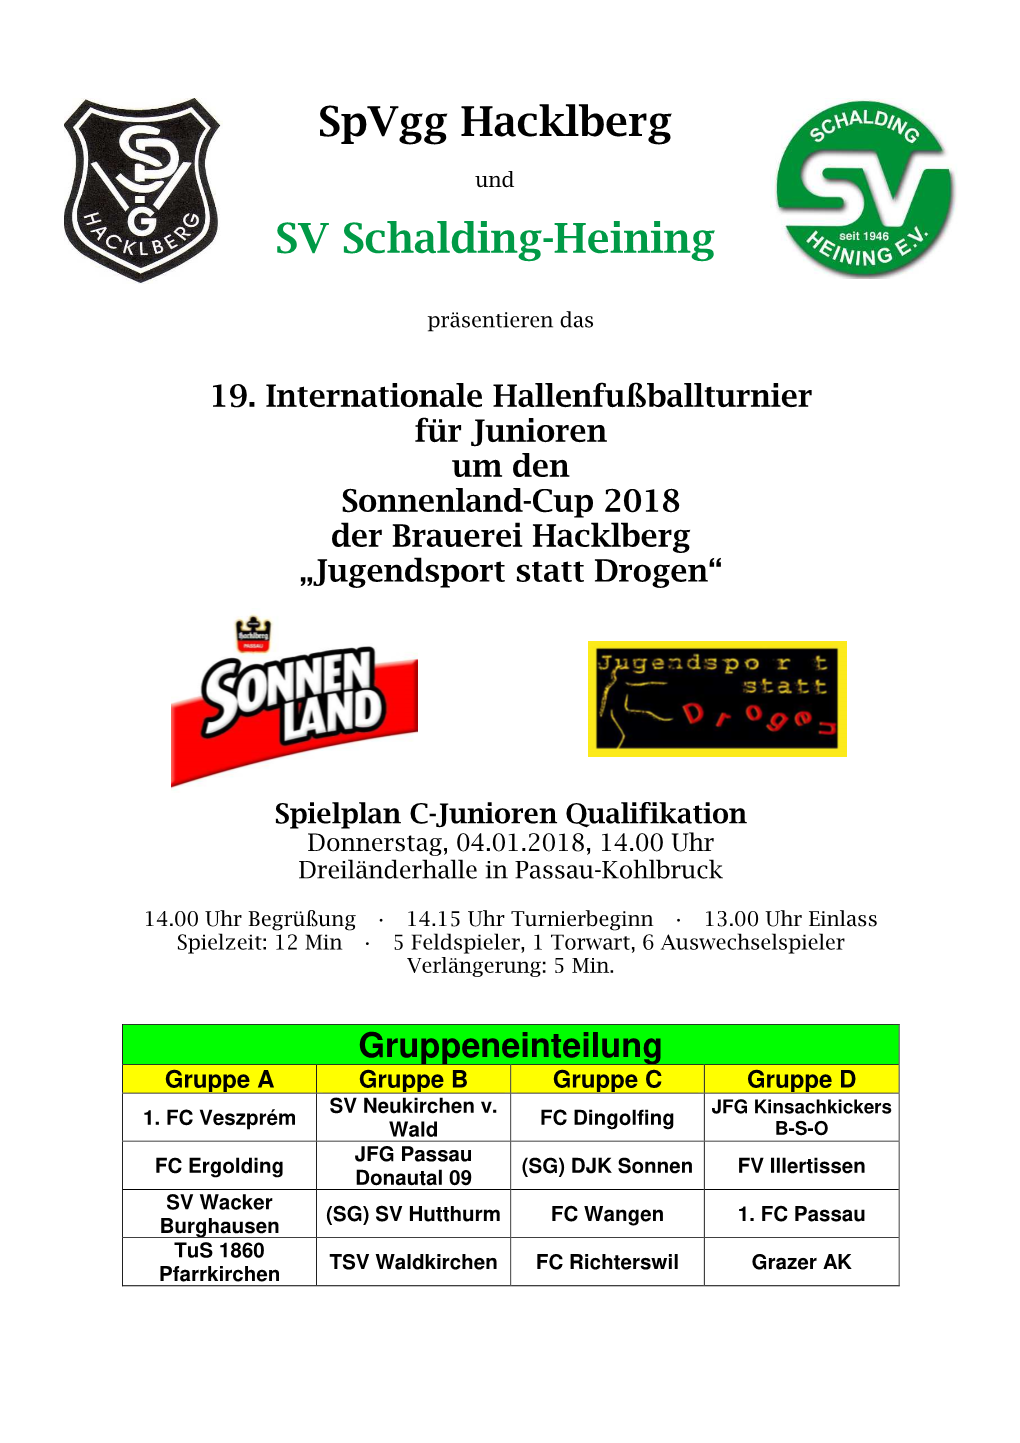 Spvgg Hacklberg SV Schalding-Heining